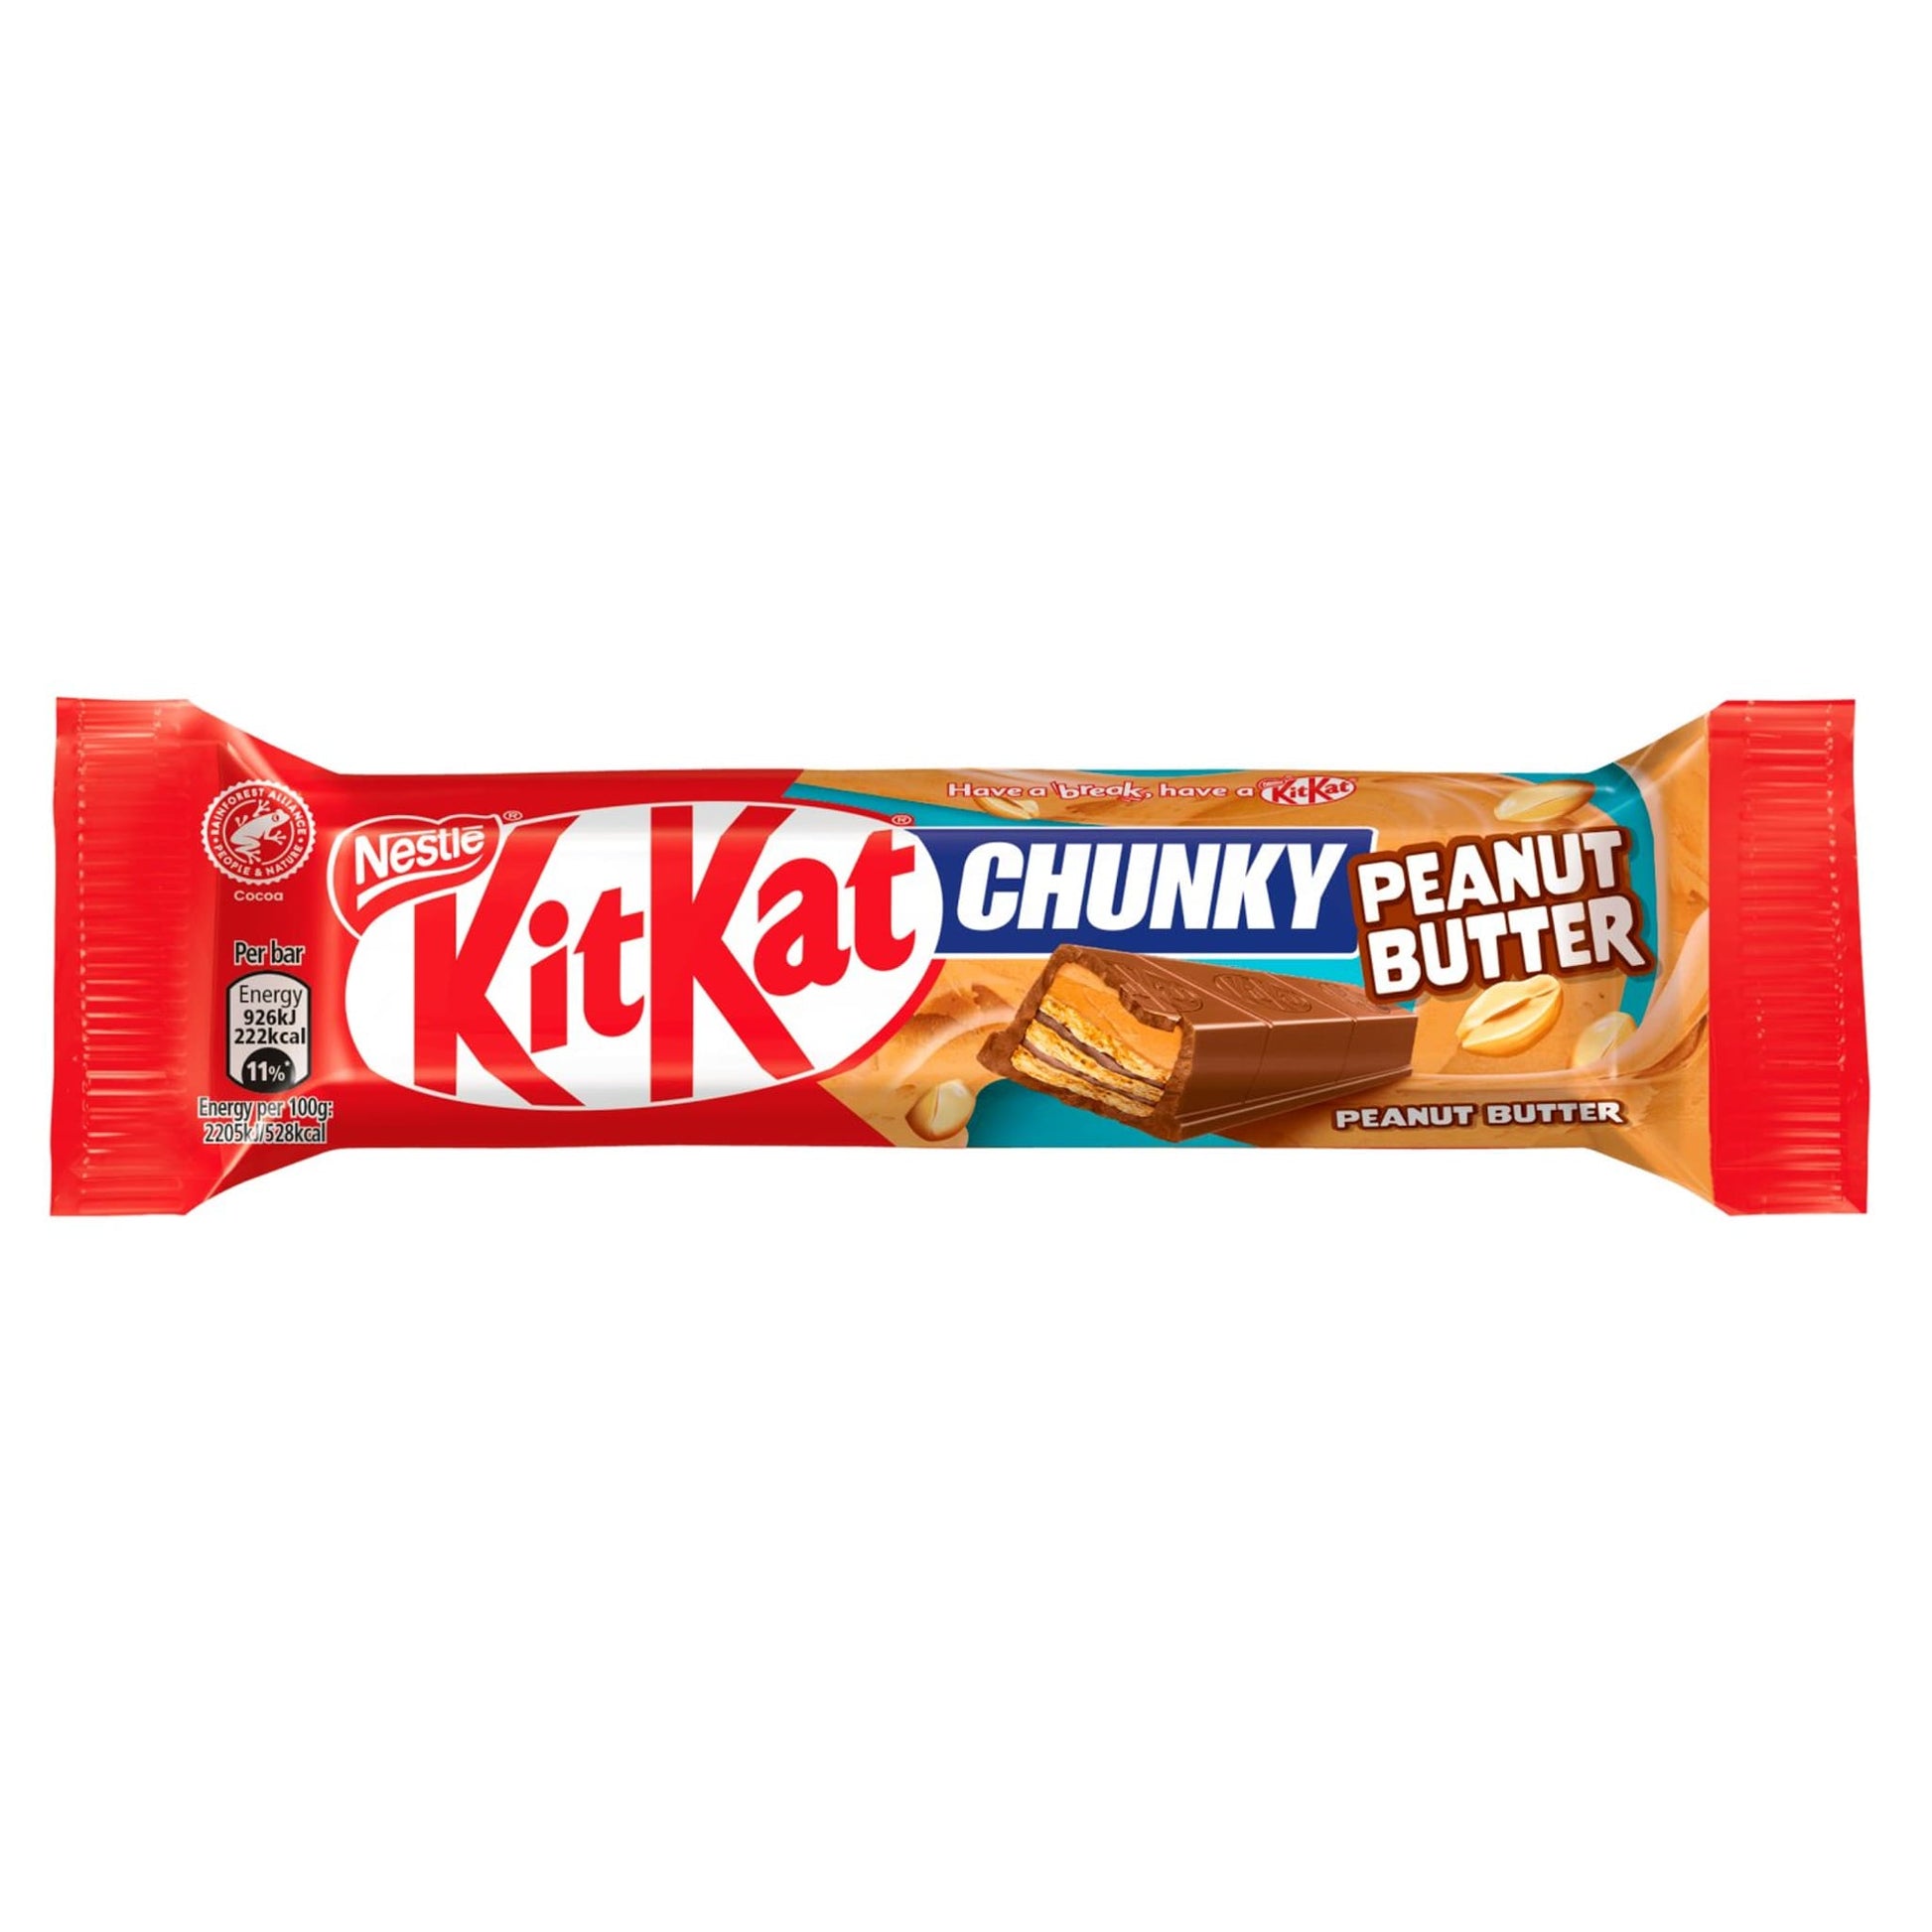 KitKat Chunky Peanut Butter chocolate bar